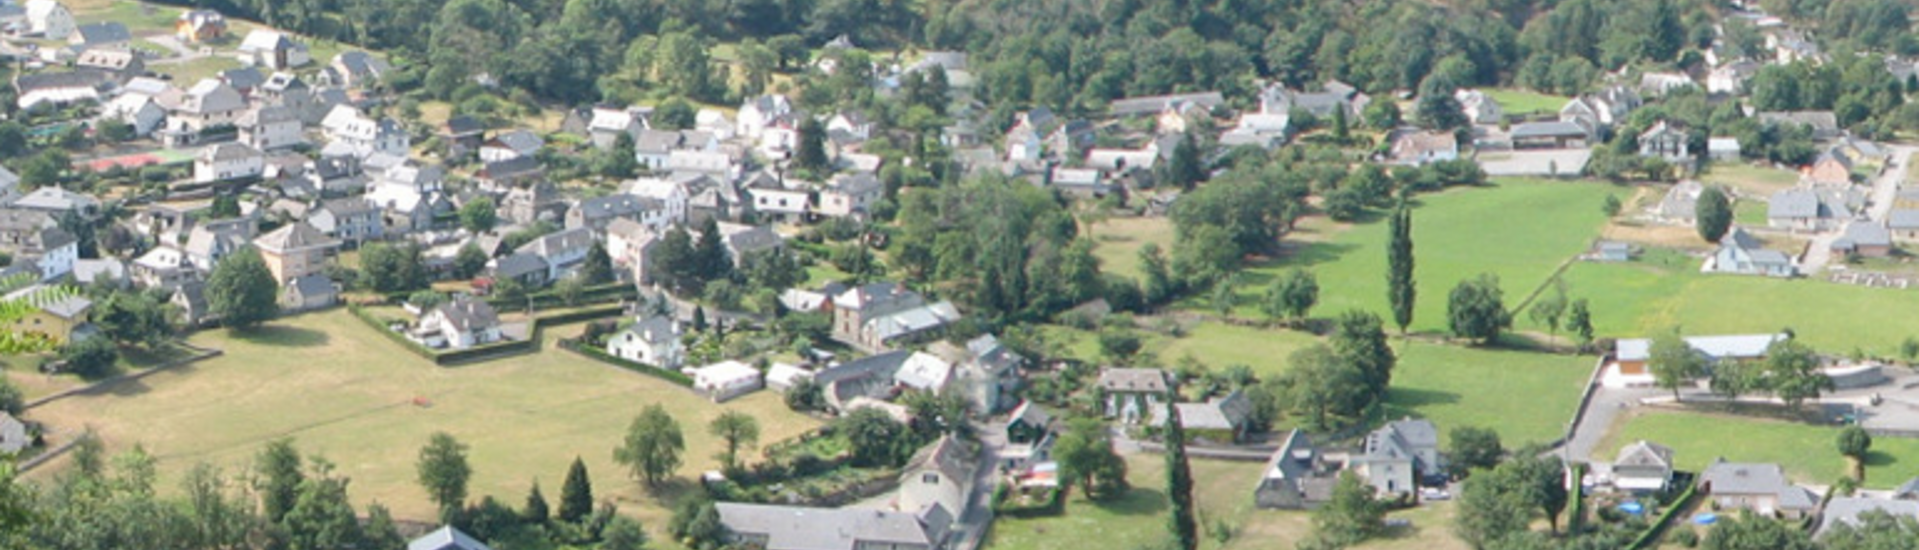 Plan de Villelongue Commune de Villelongue